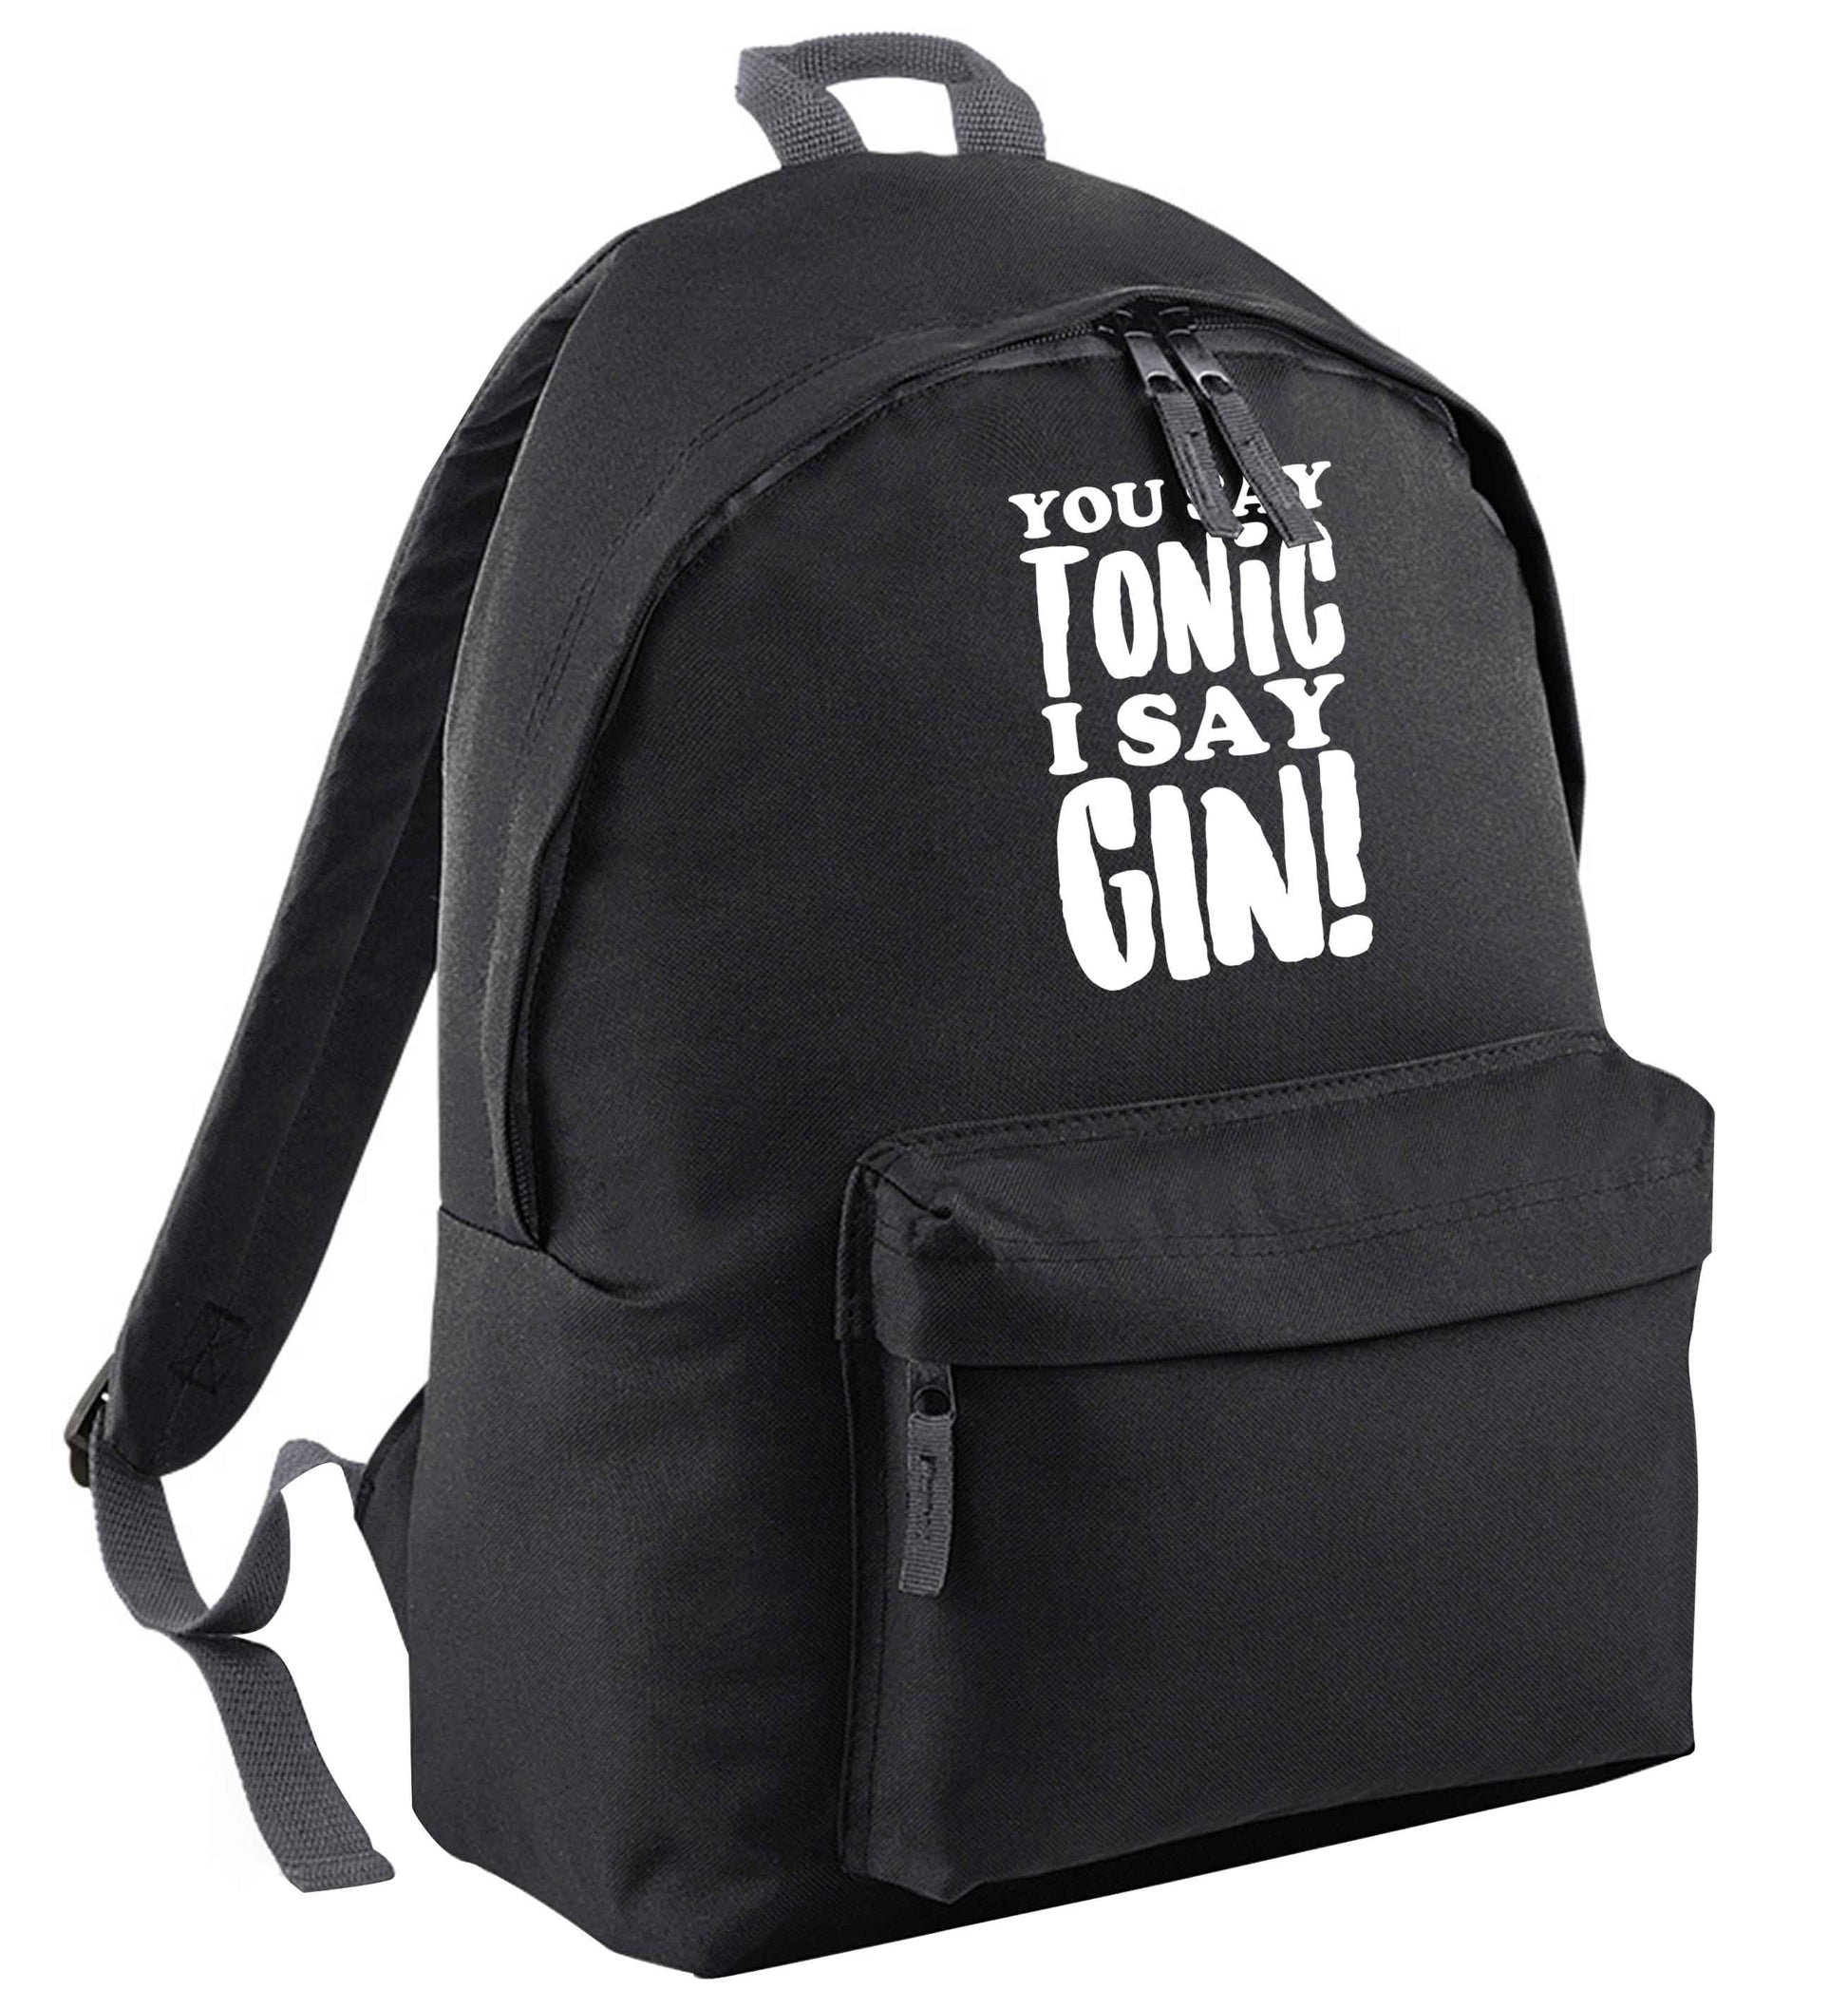 You say tonic I say gin black adults backpack